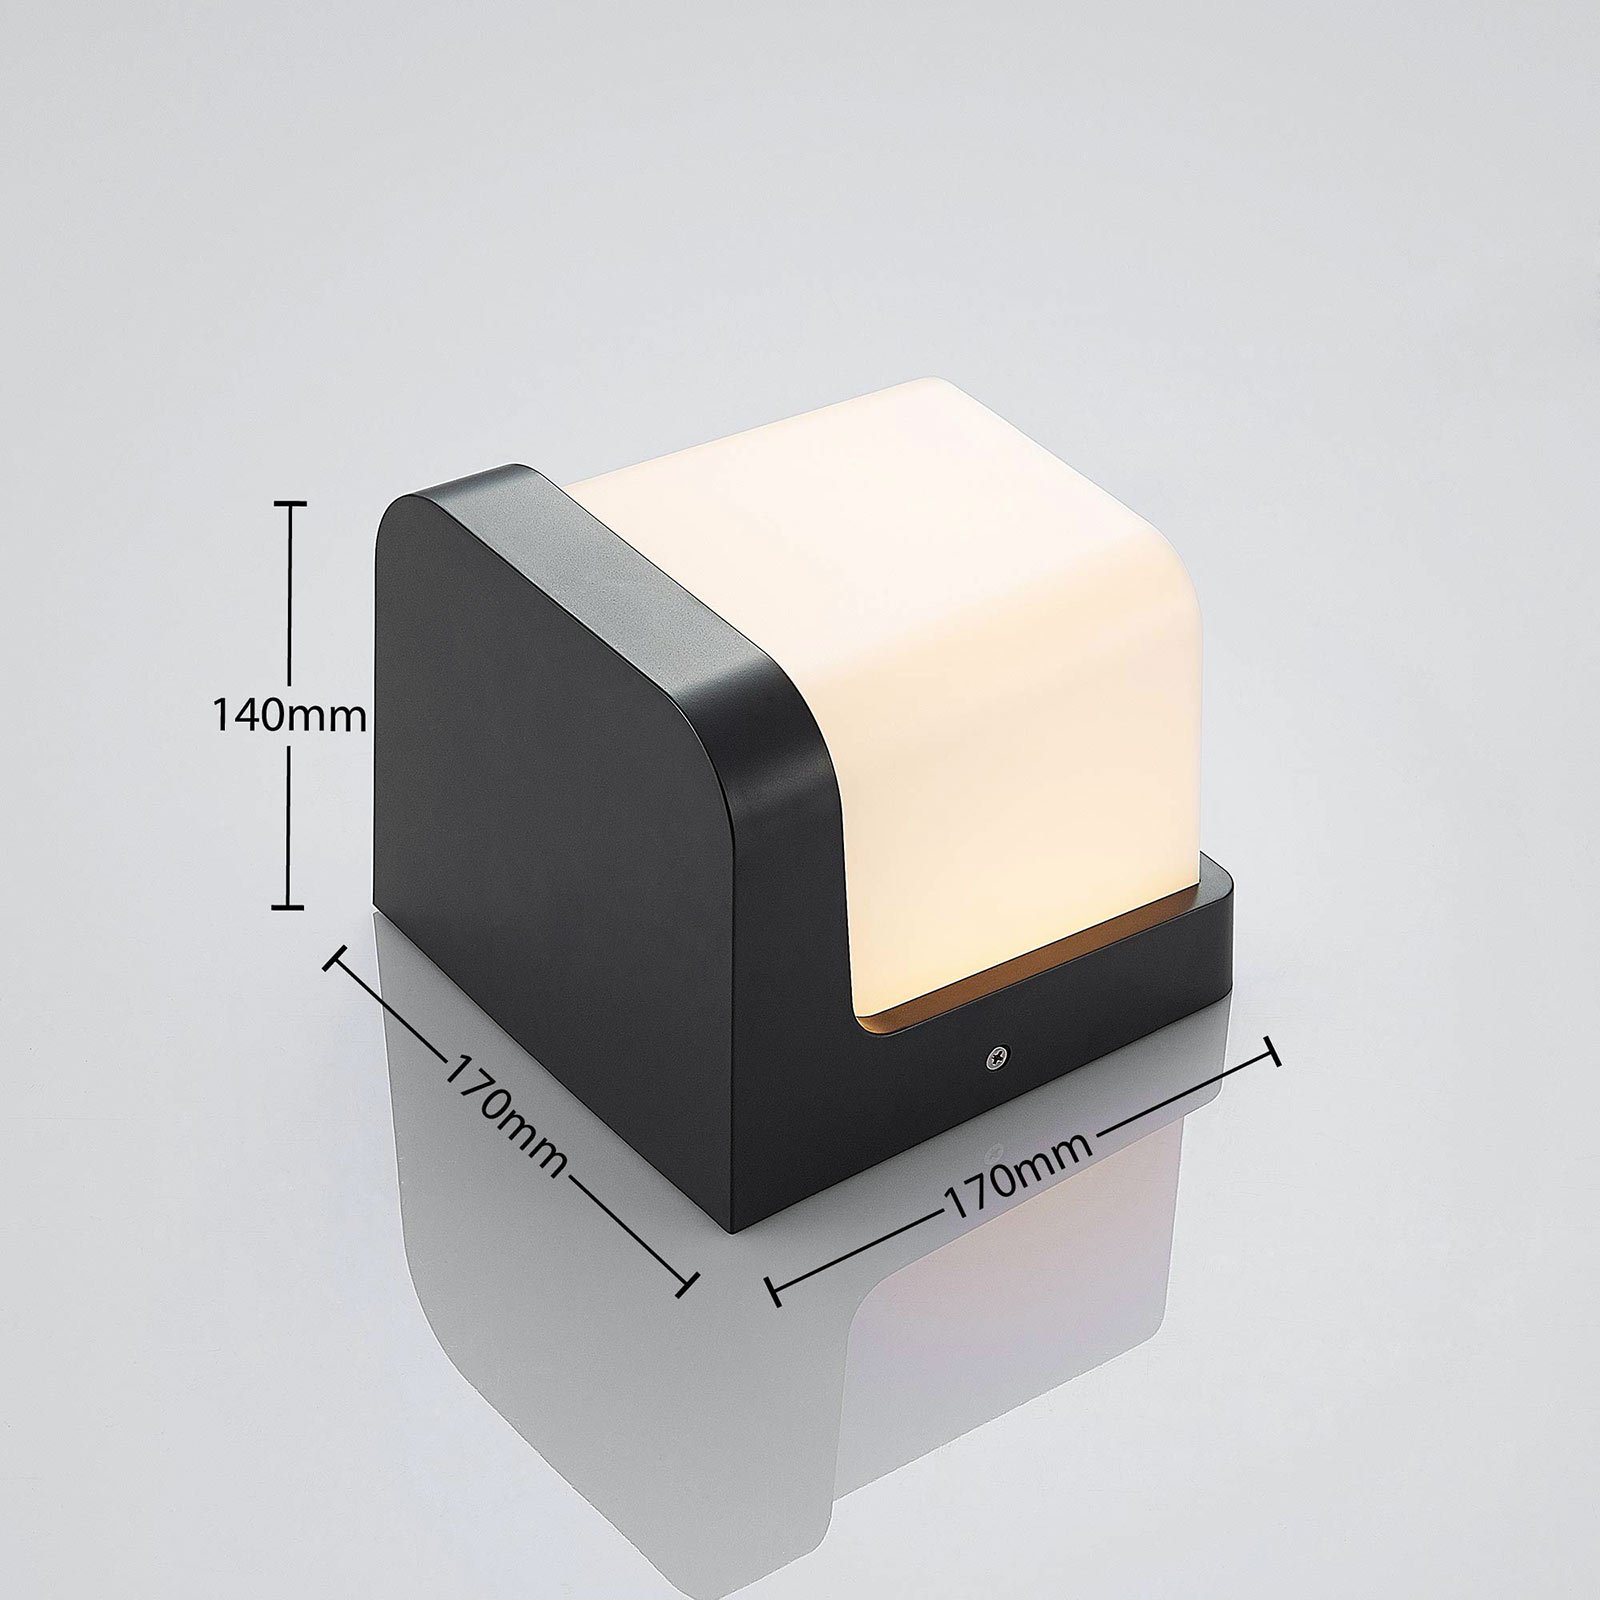 LED-Außenwandlampe Adenike ohne Sensor